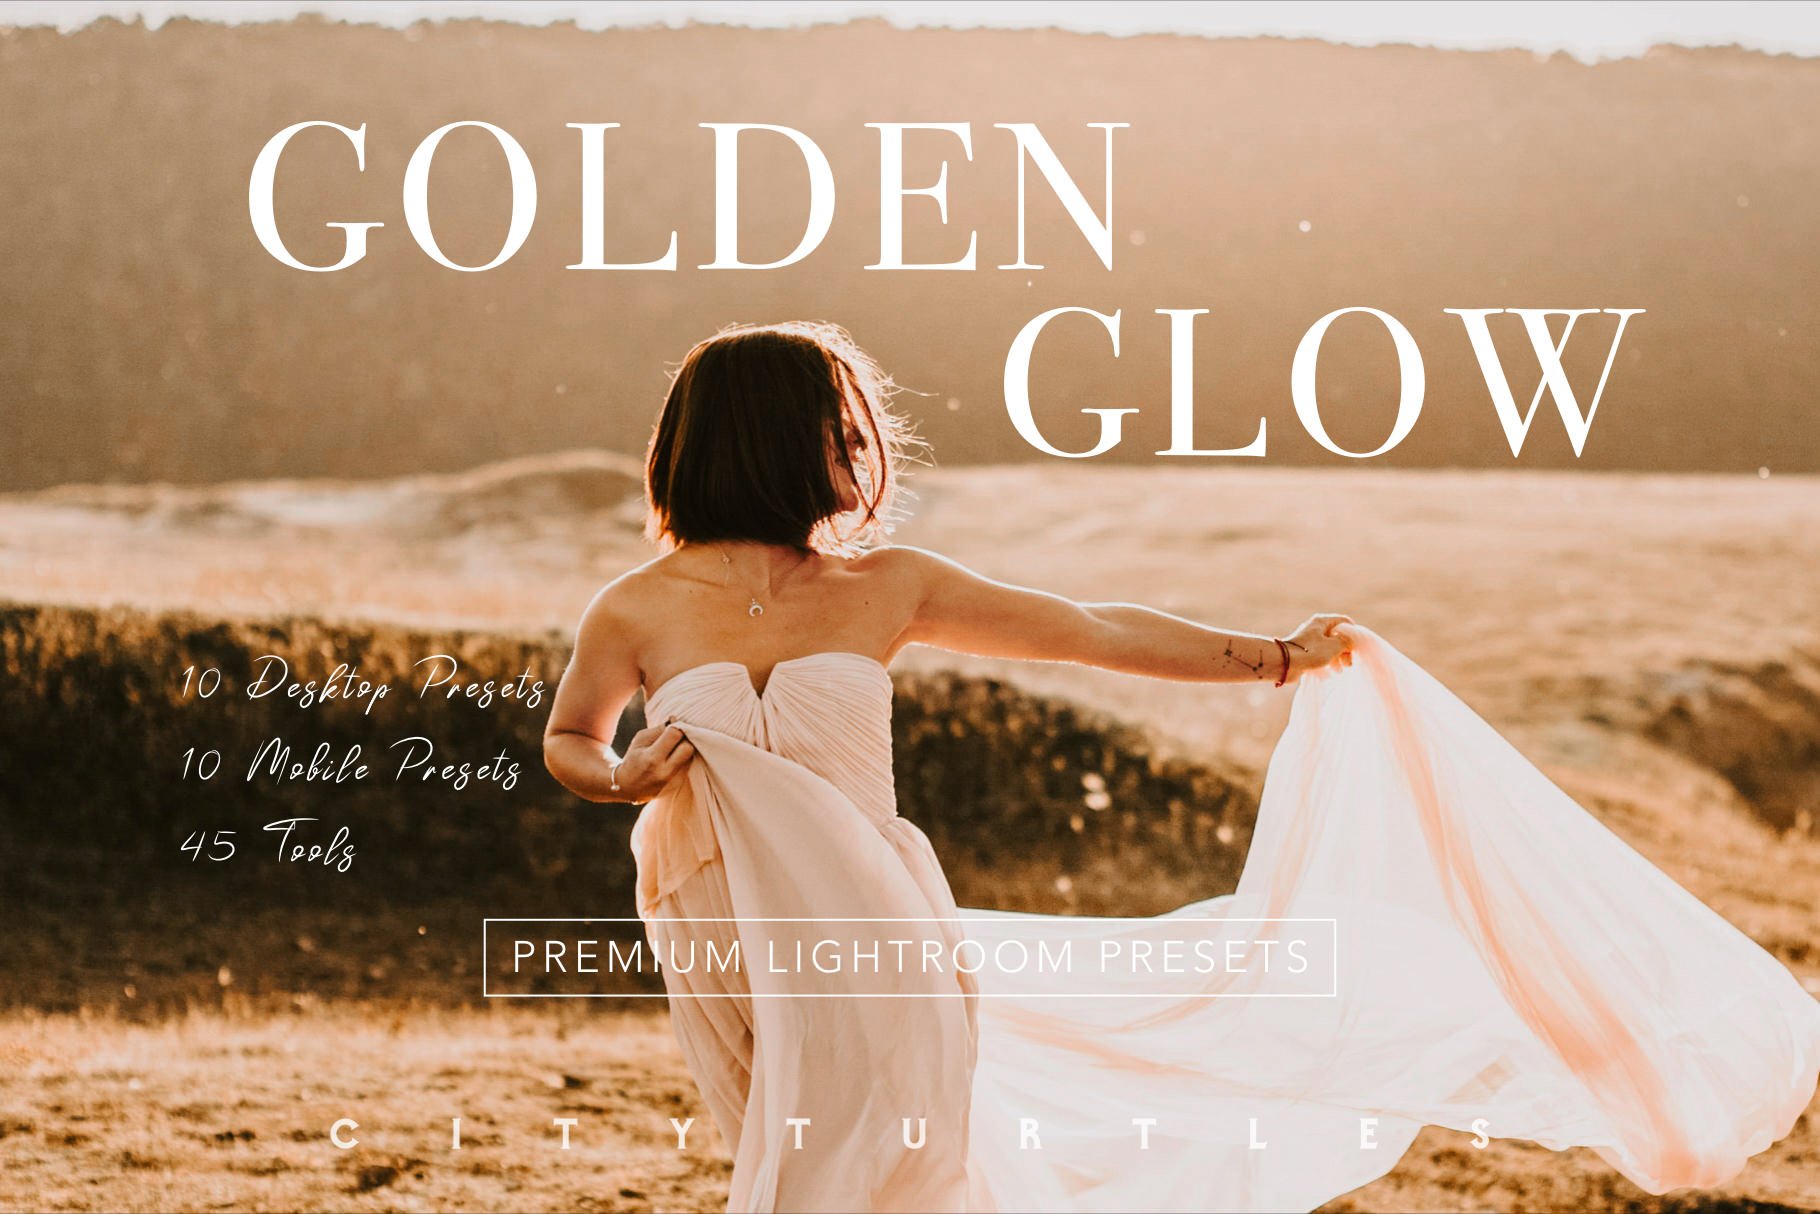 Sunny GOLDEN GLOW Lightroom Presetscover image.